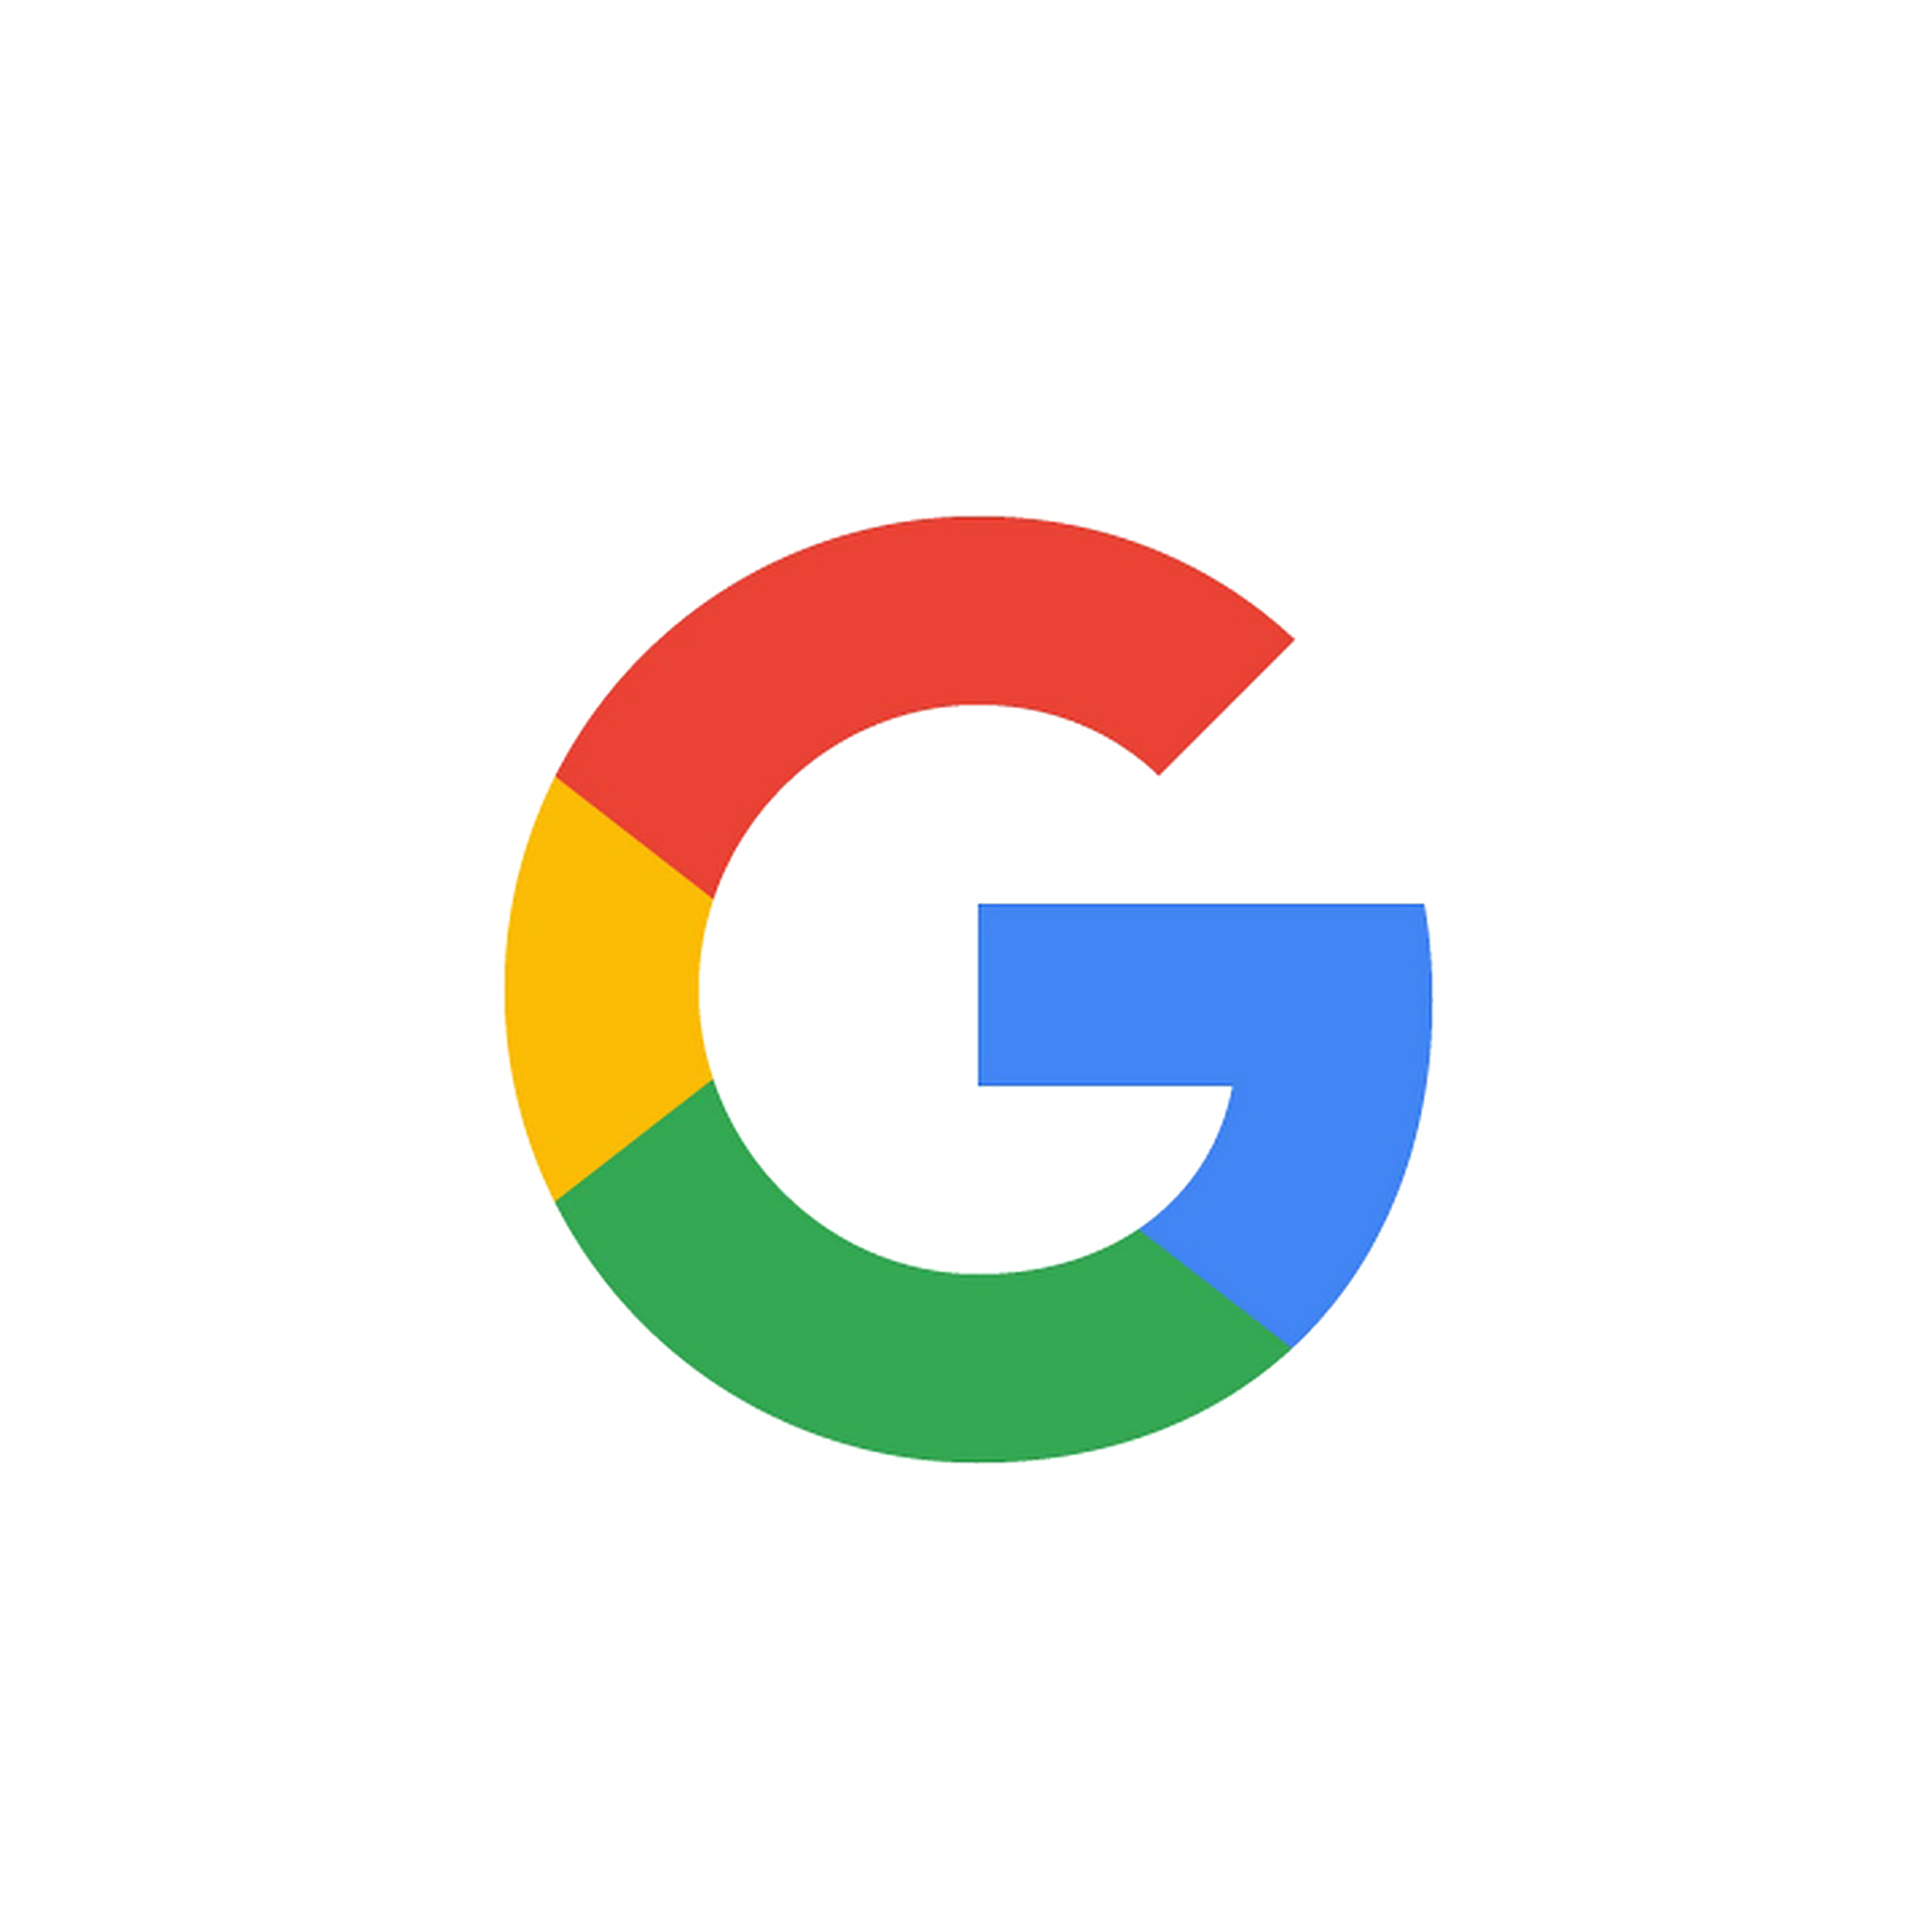 Google sign in